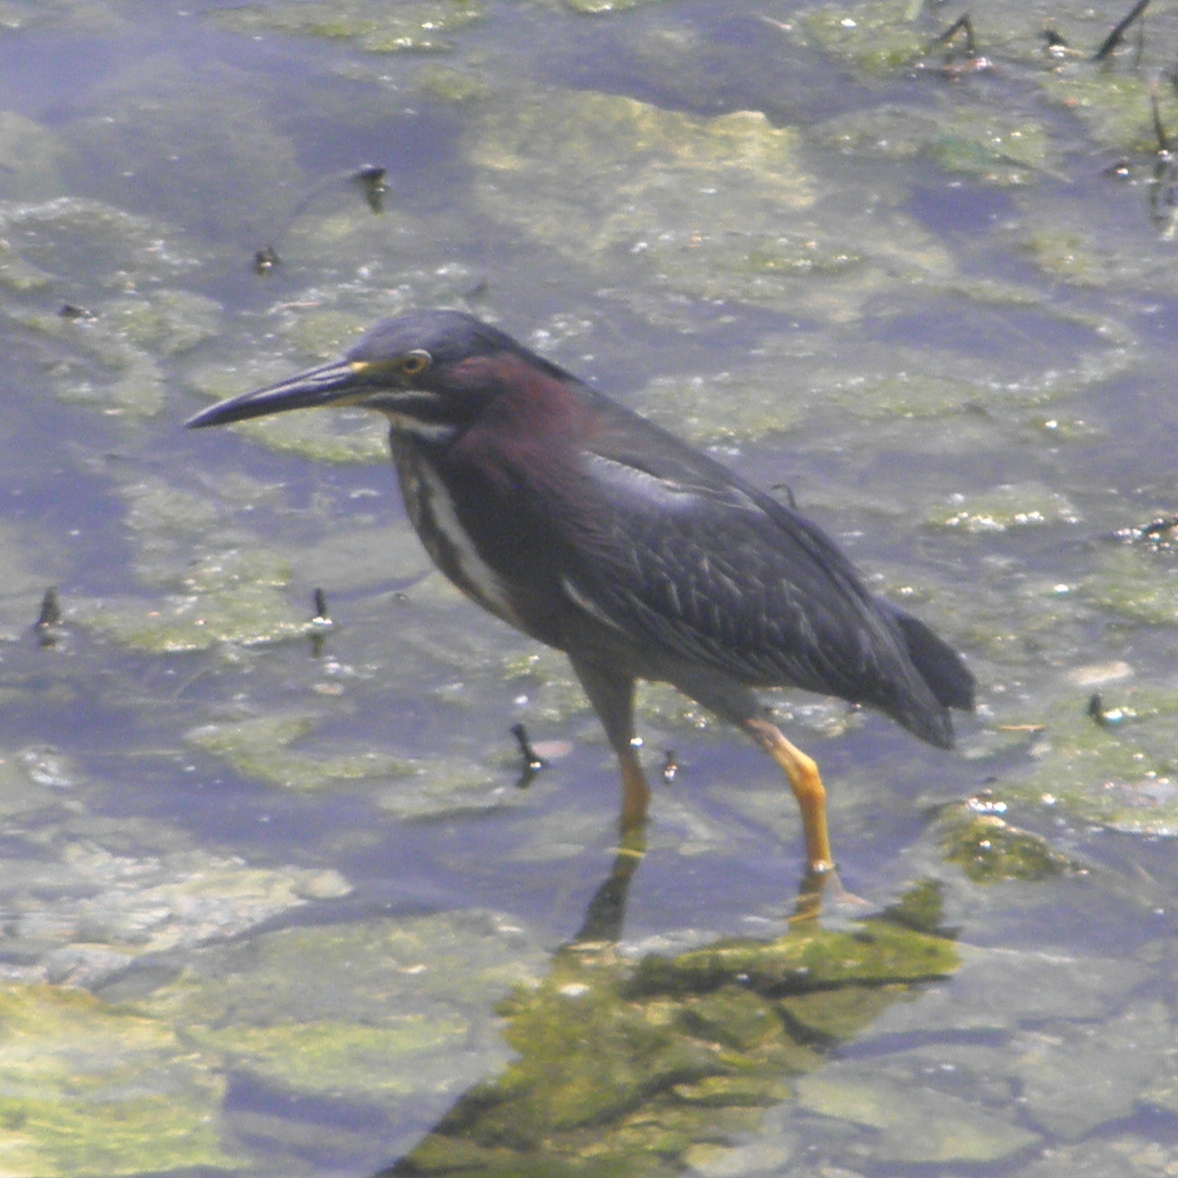 a bird standing in the water near algae